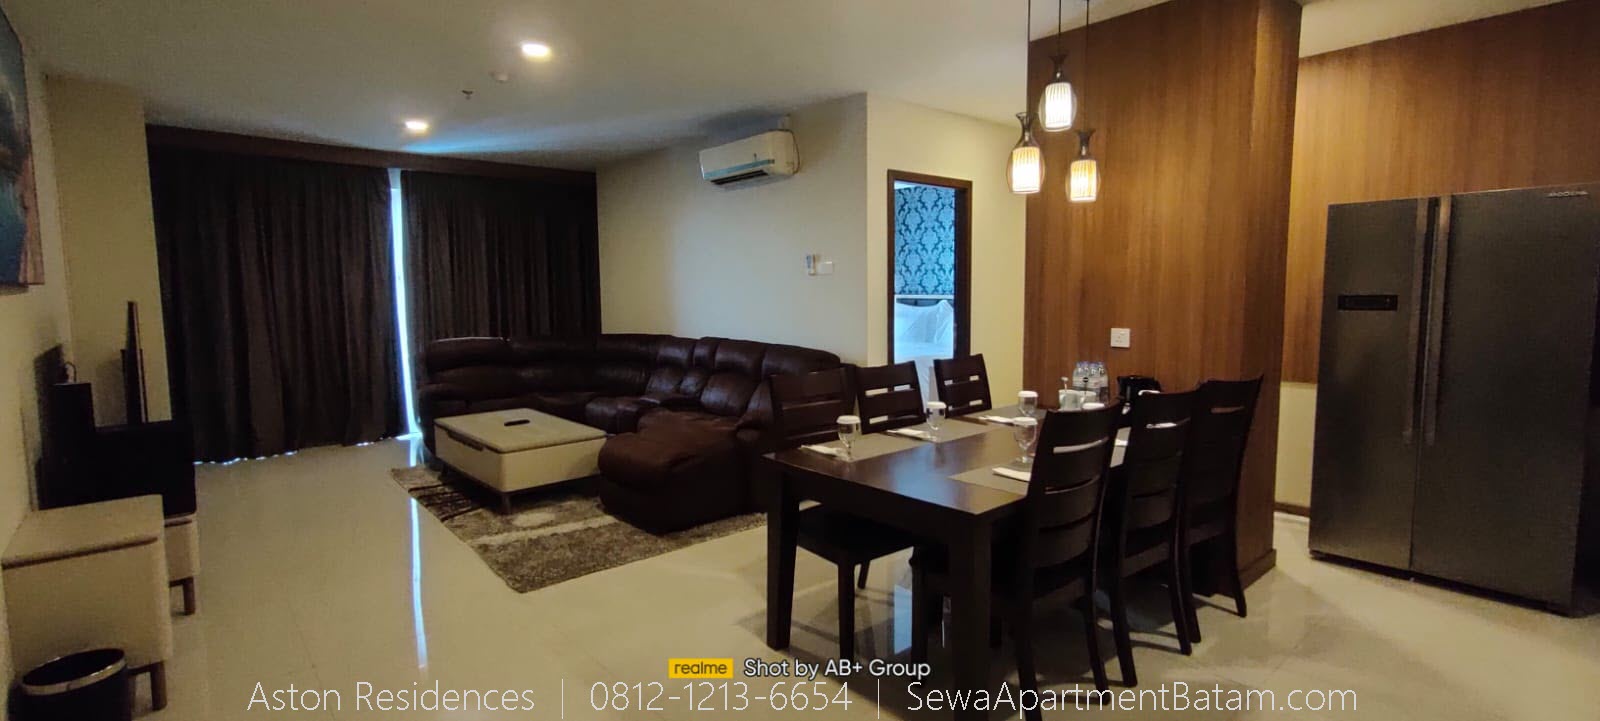 141 | Aston Residences | 3 Bedroom | Full Furnish | City, Sea, Singapore View | Lantai 12